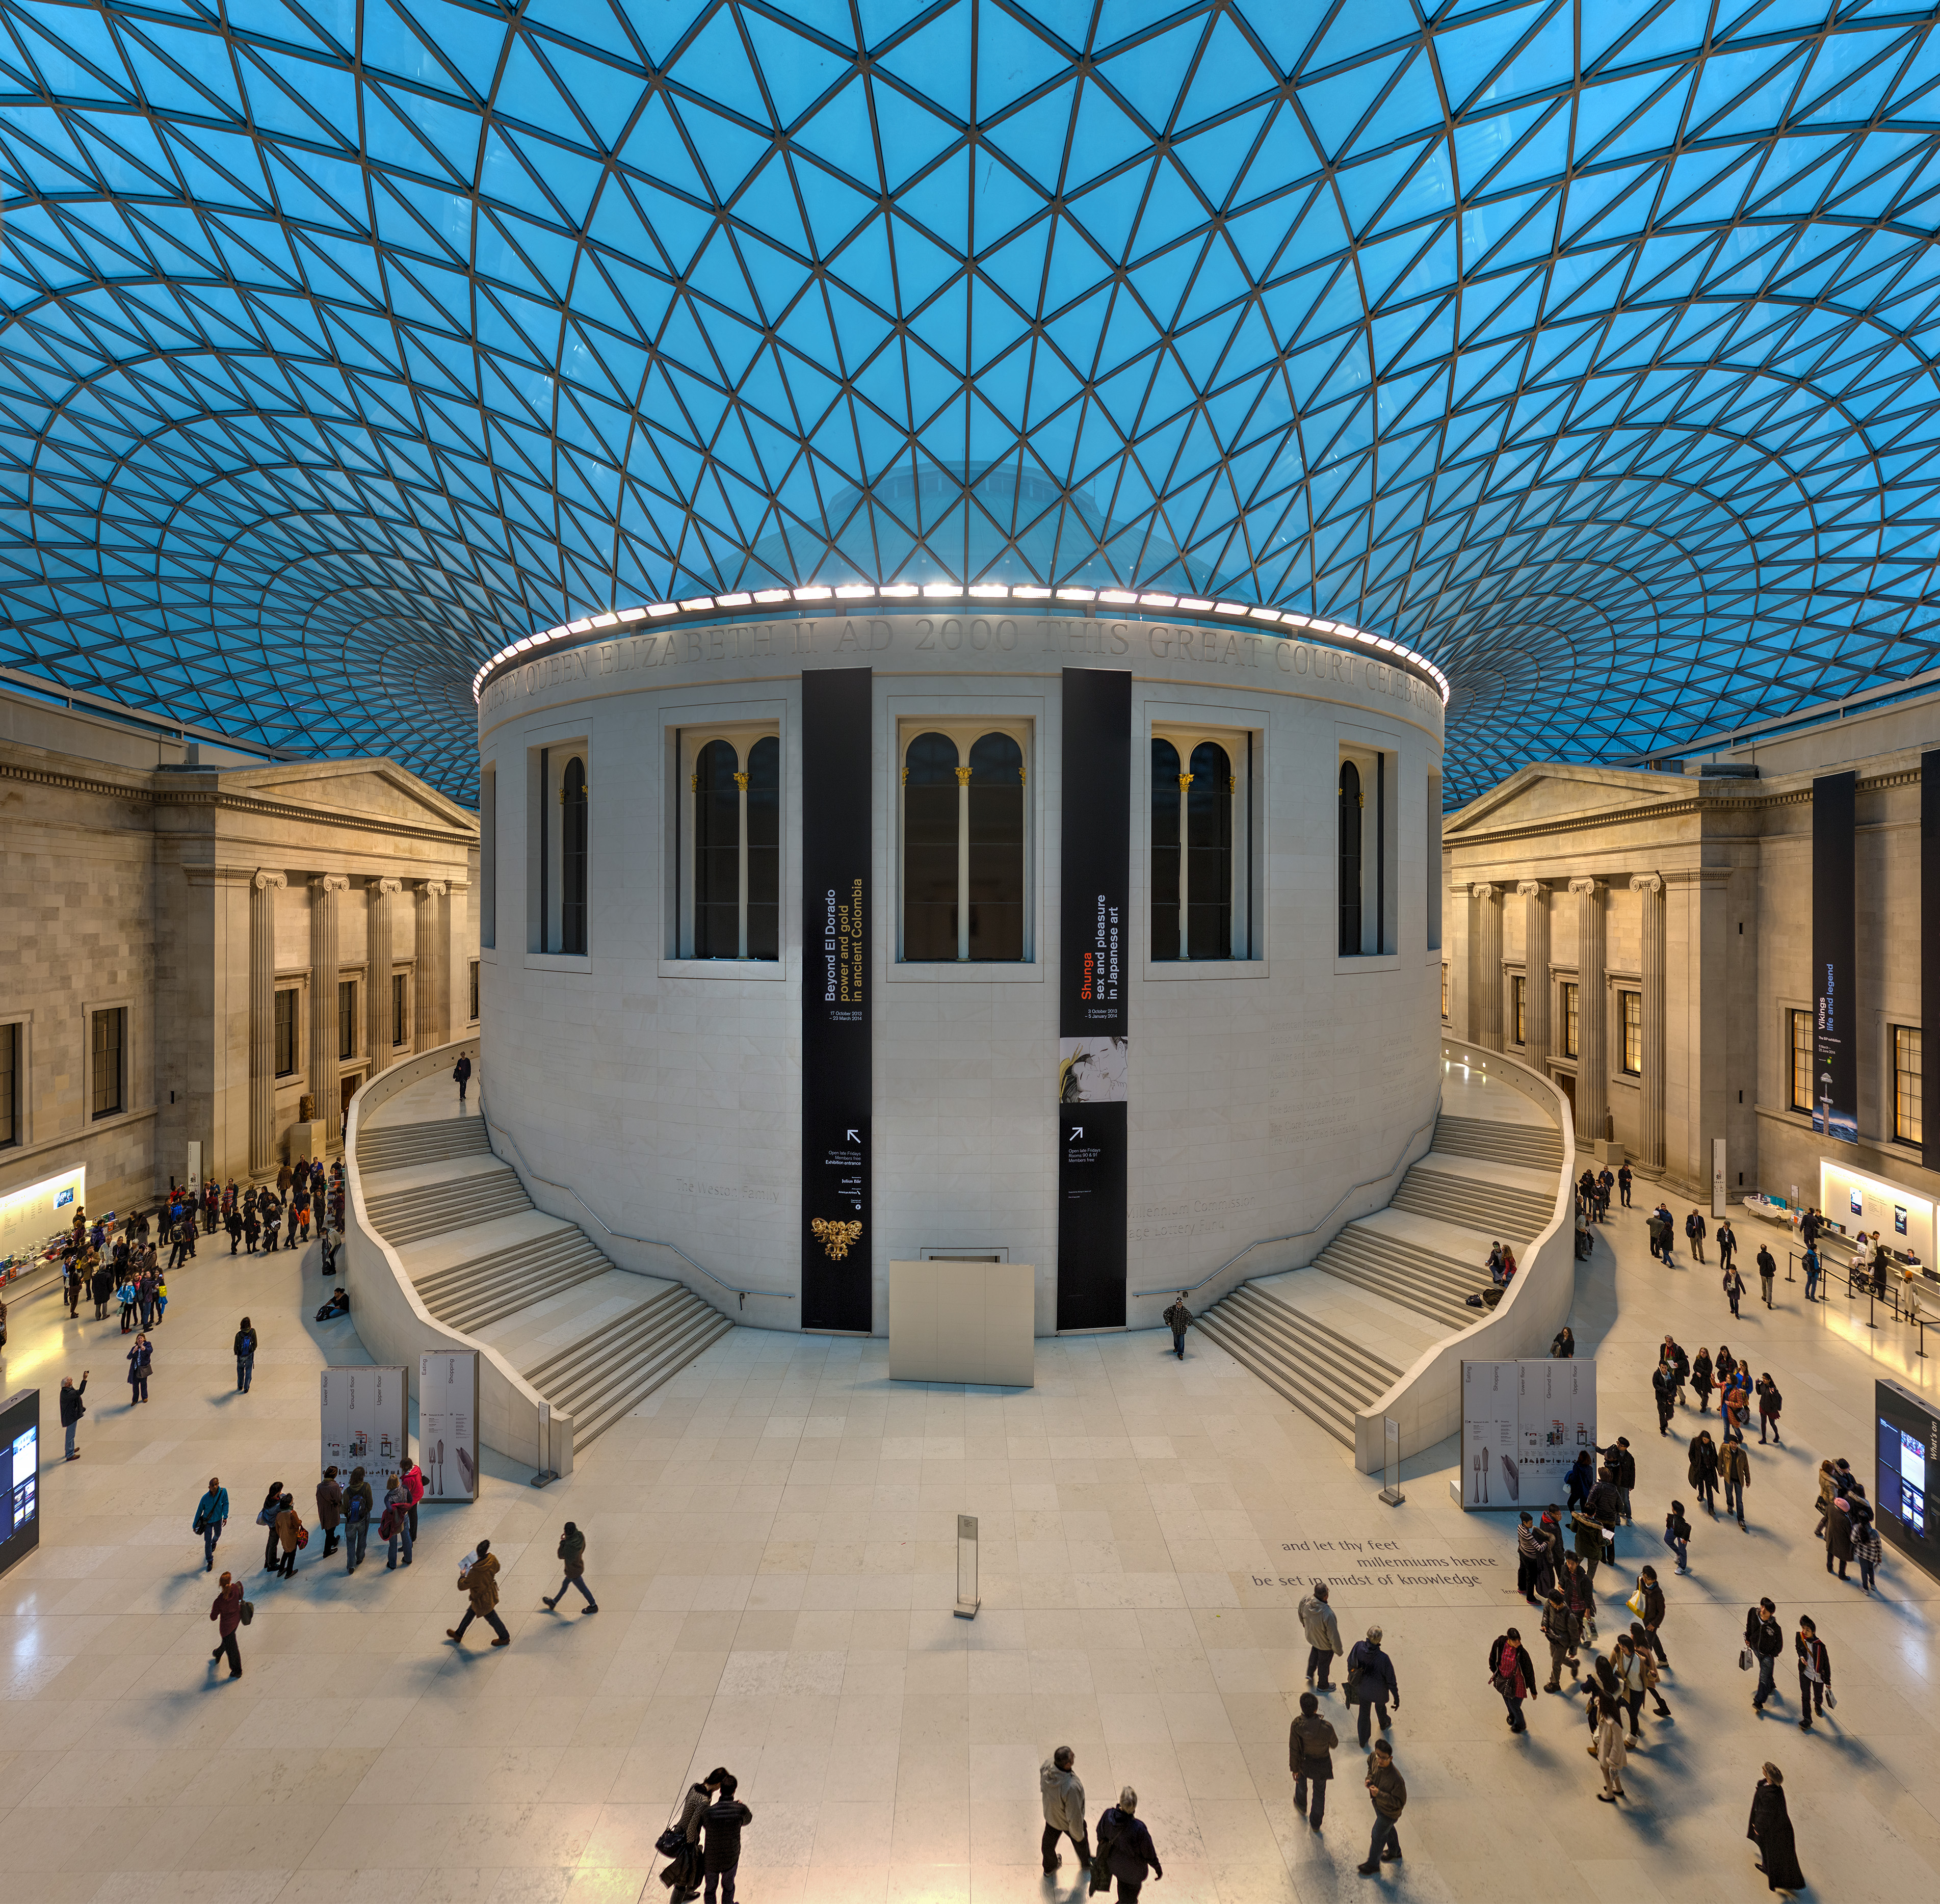 British Museum Great Court, London, UK - Diliff